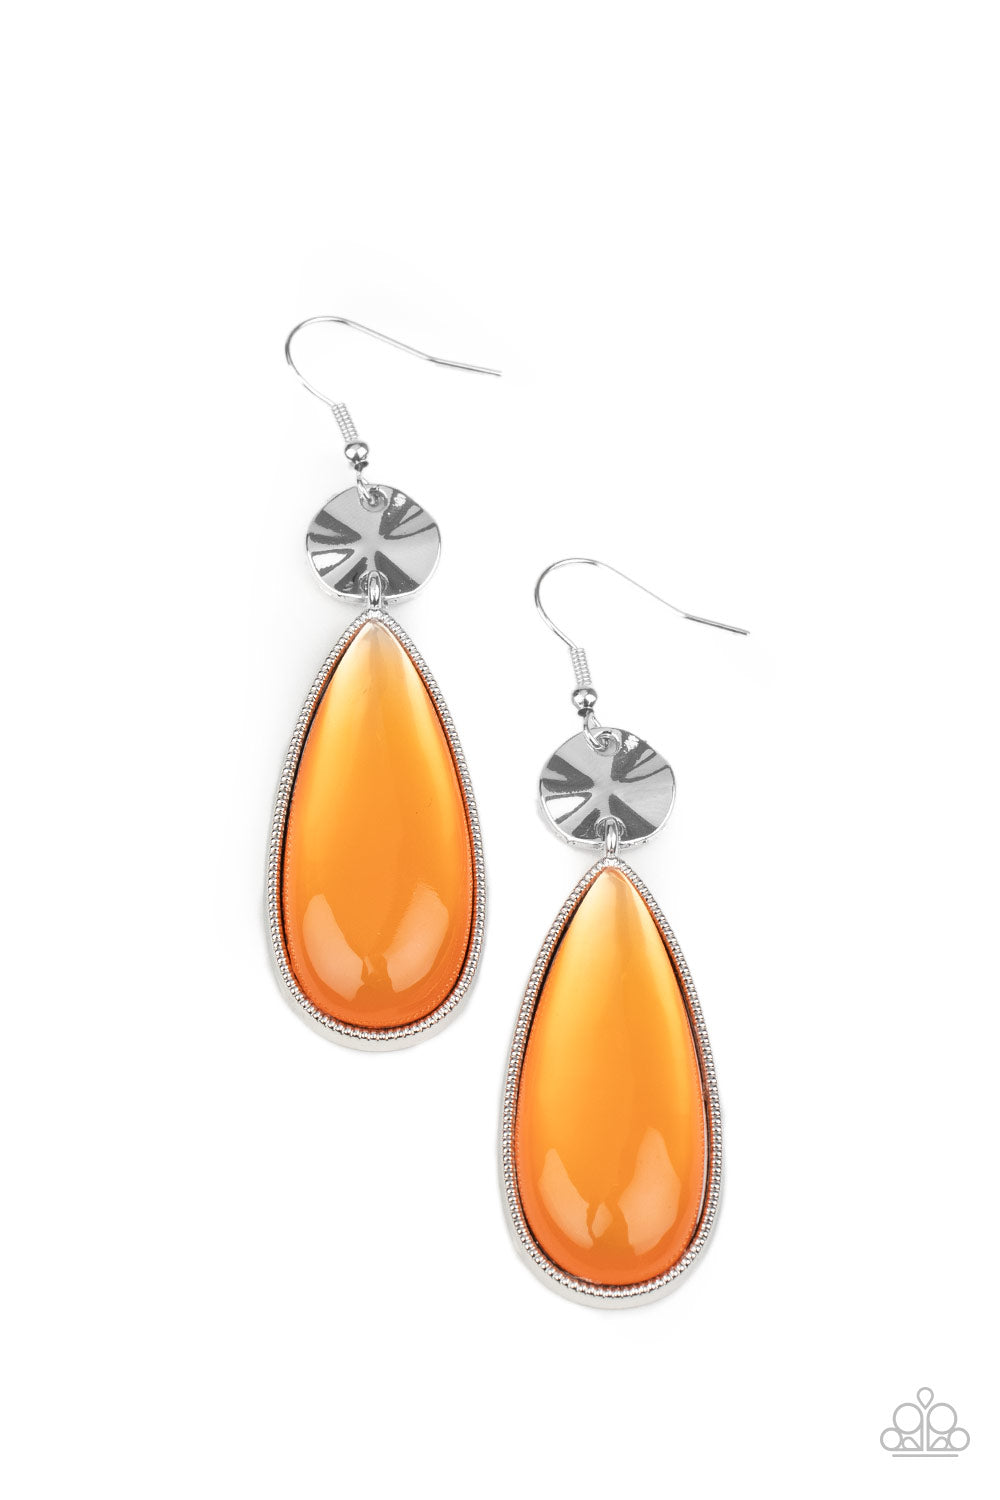 Jaw-Dropping Drama - Orange earrings